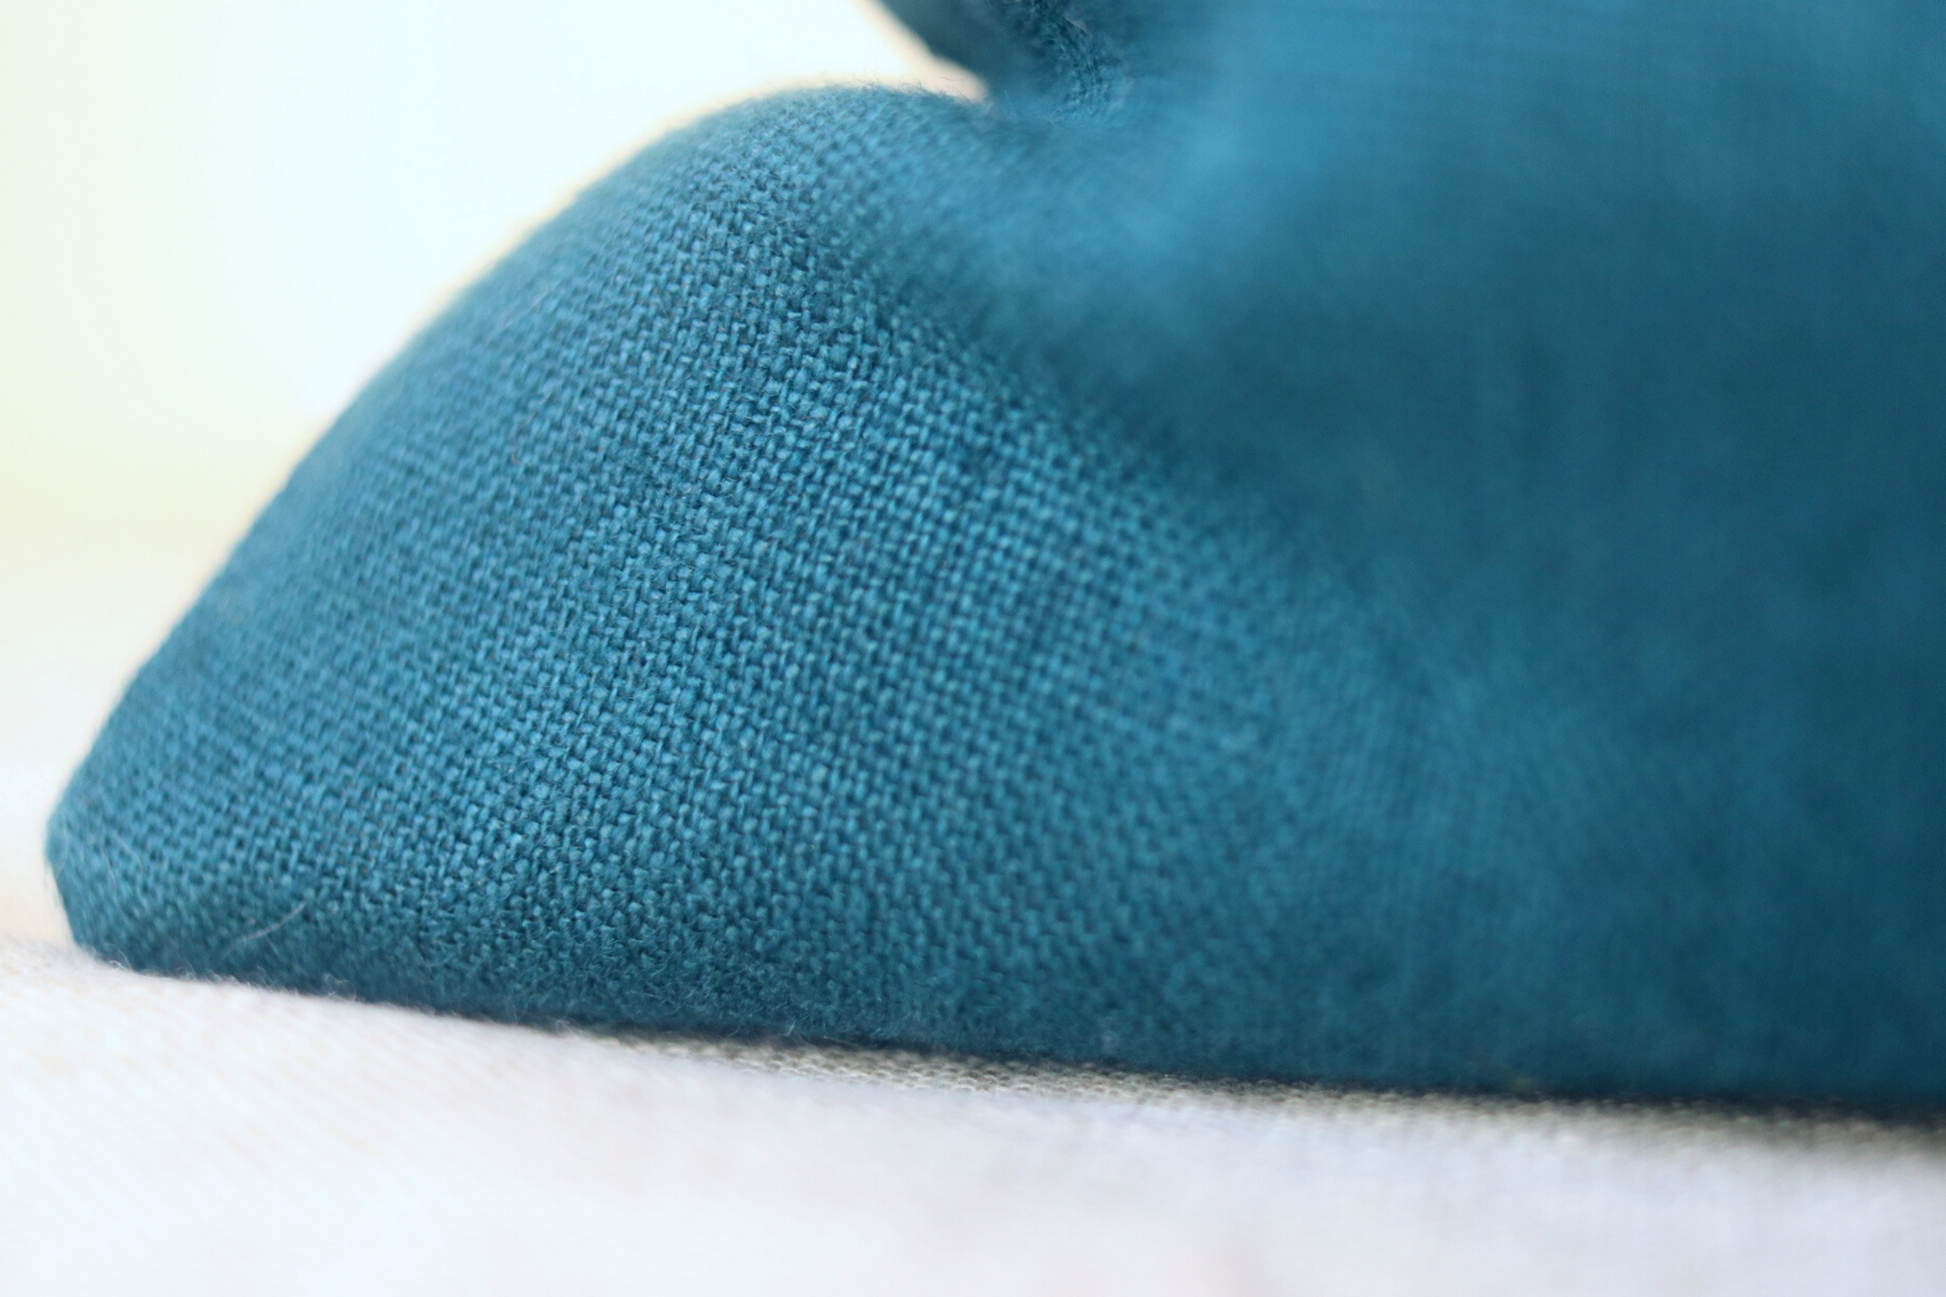 Cushion close up of blue linen